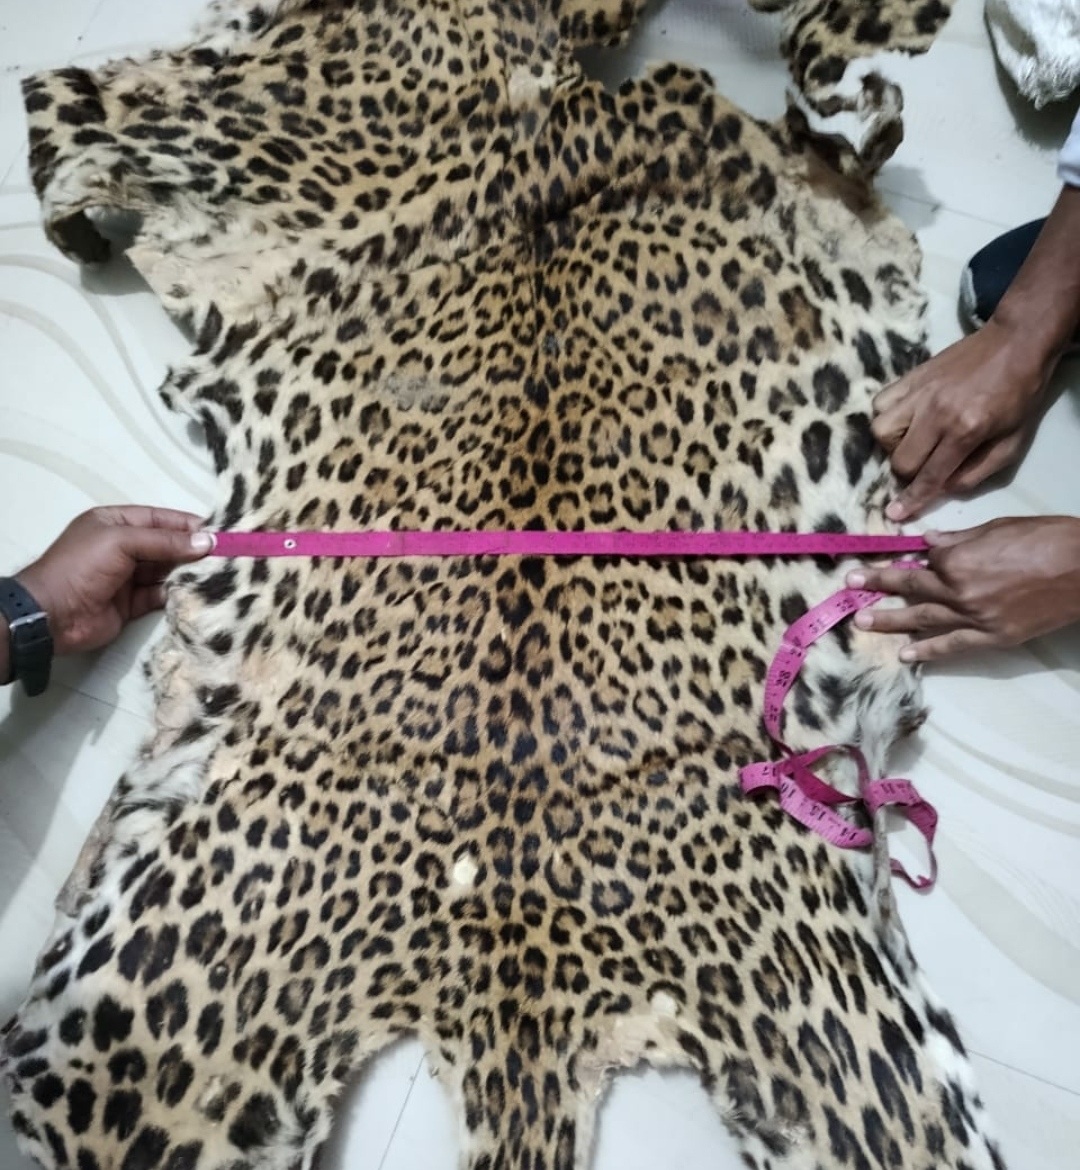 leopard skin